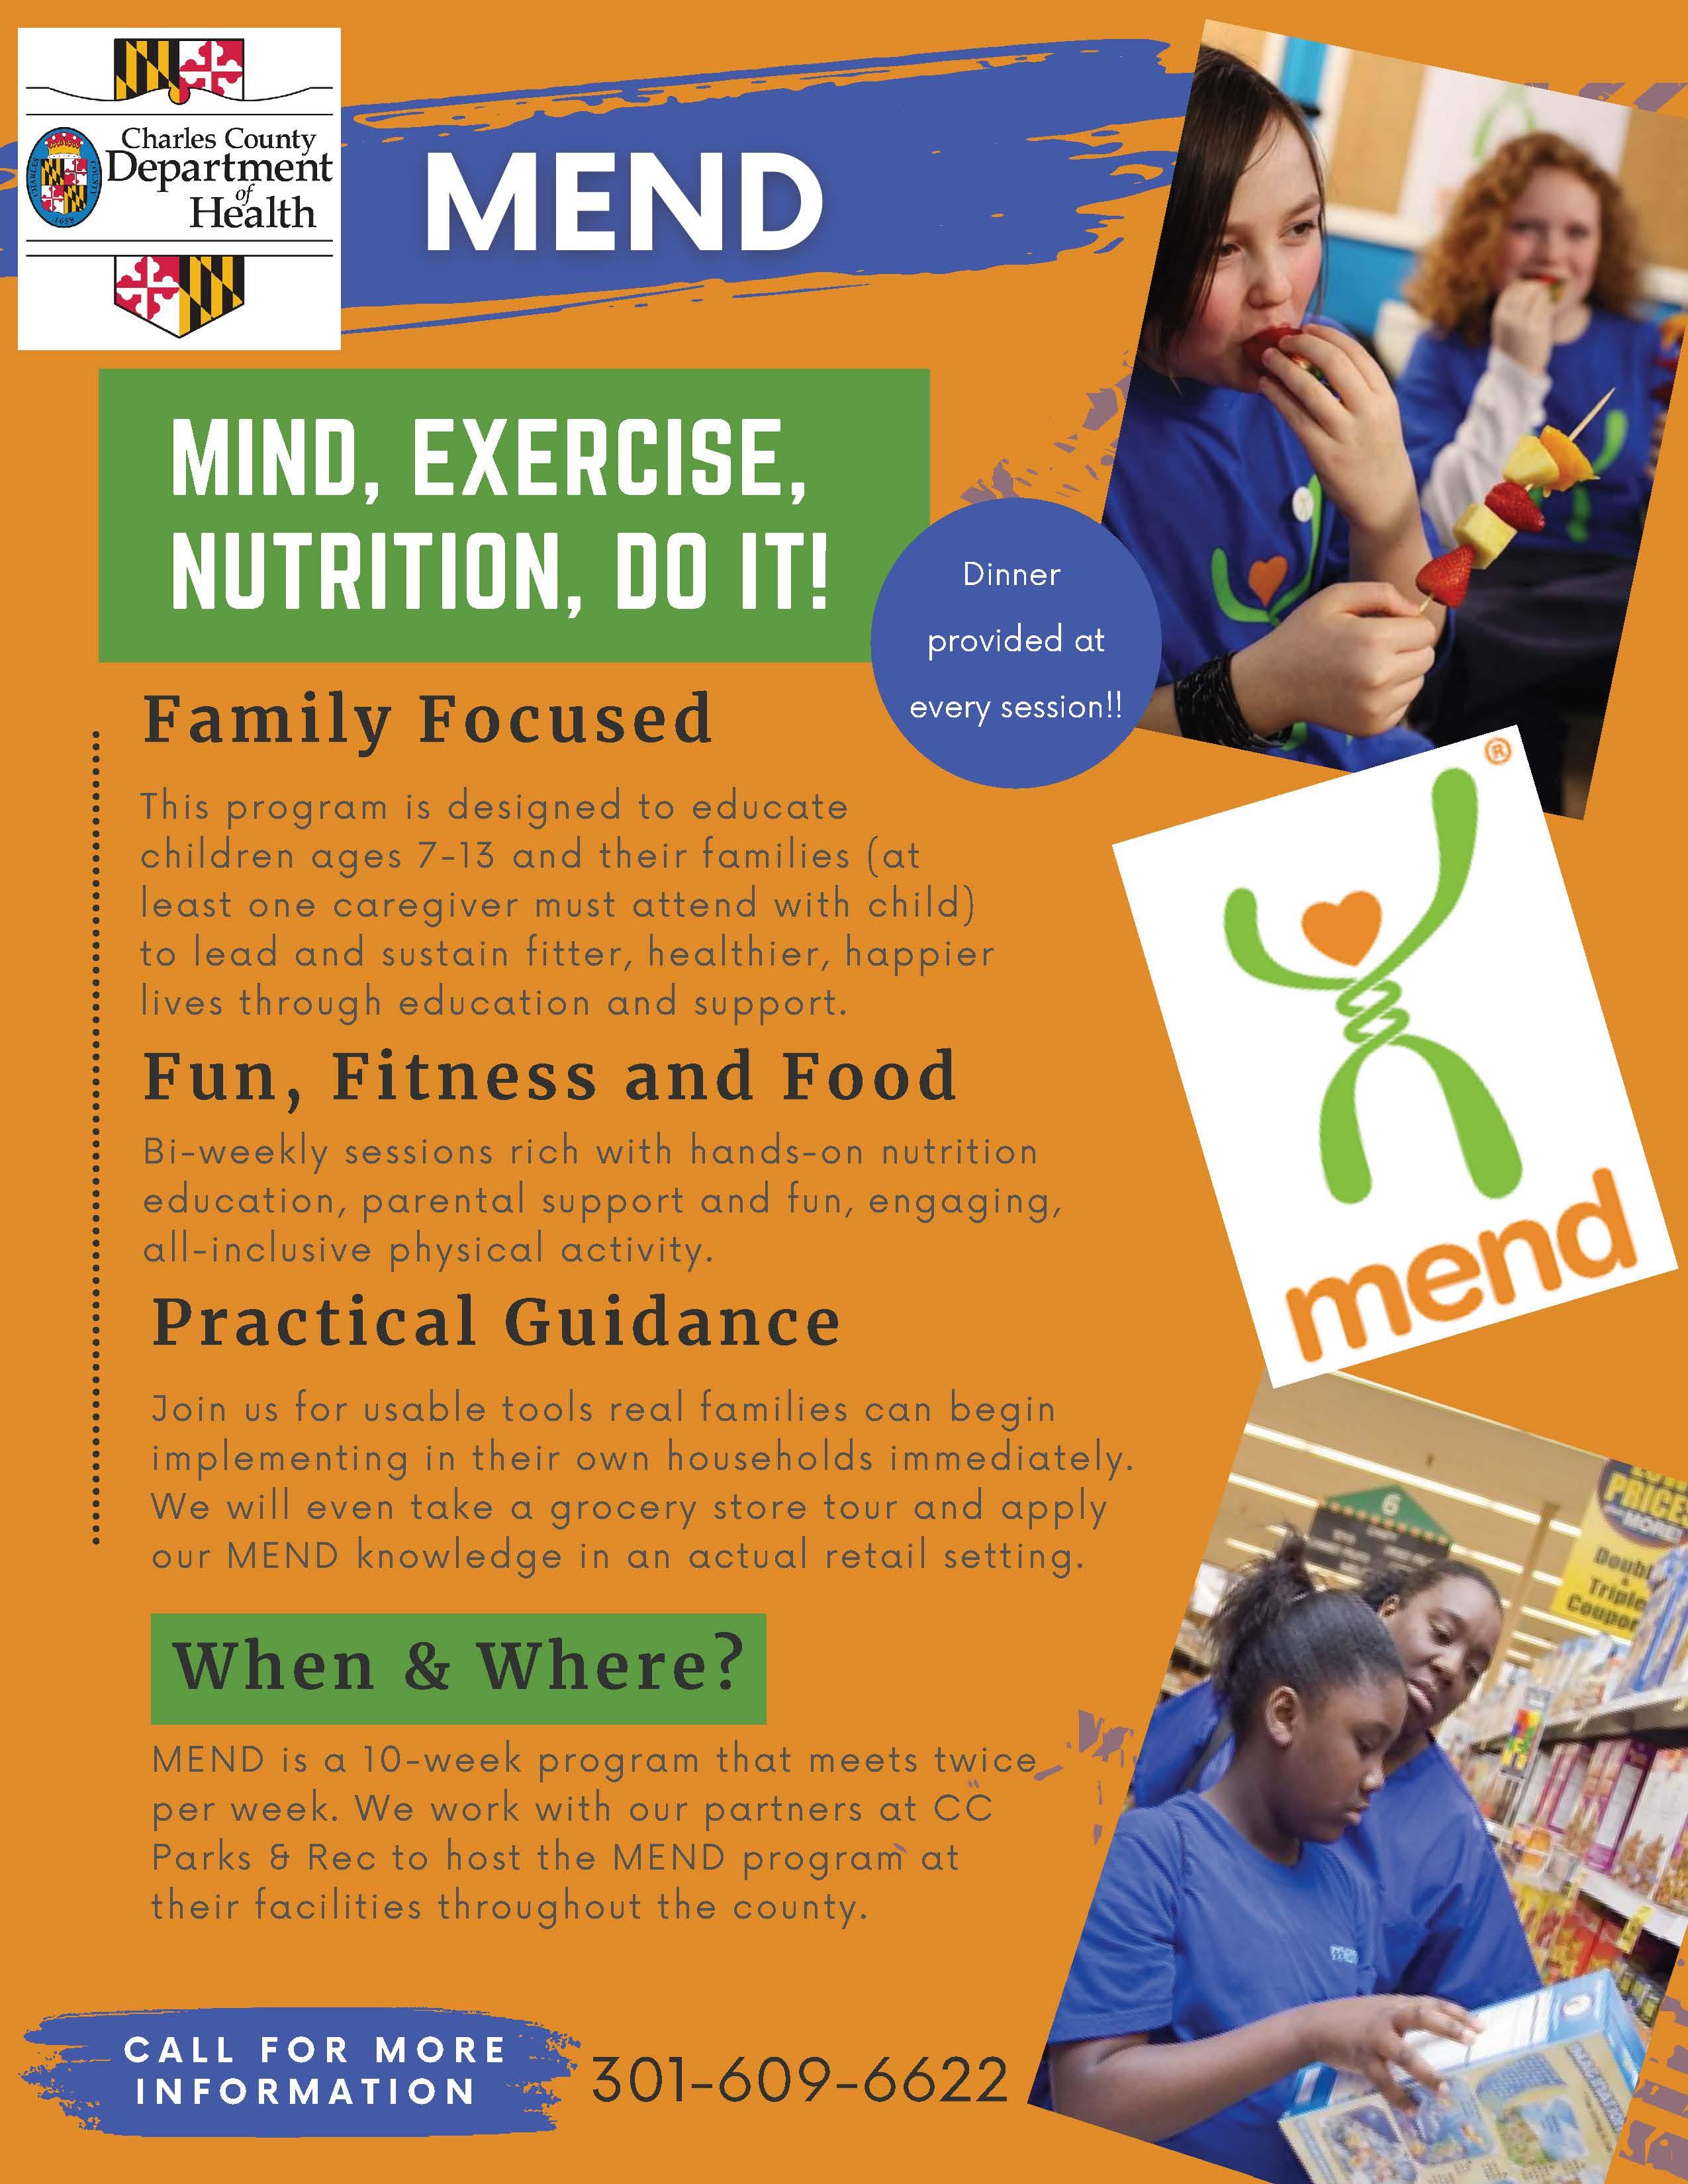 Flyer promoting a wellness program